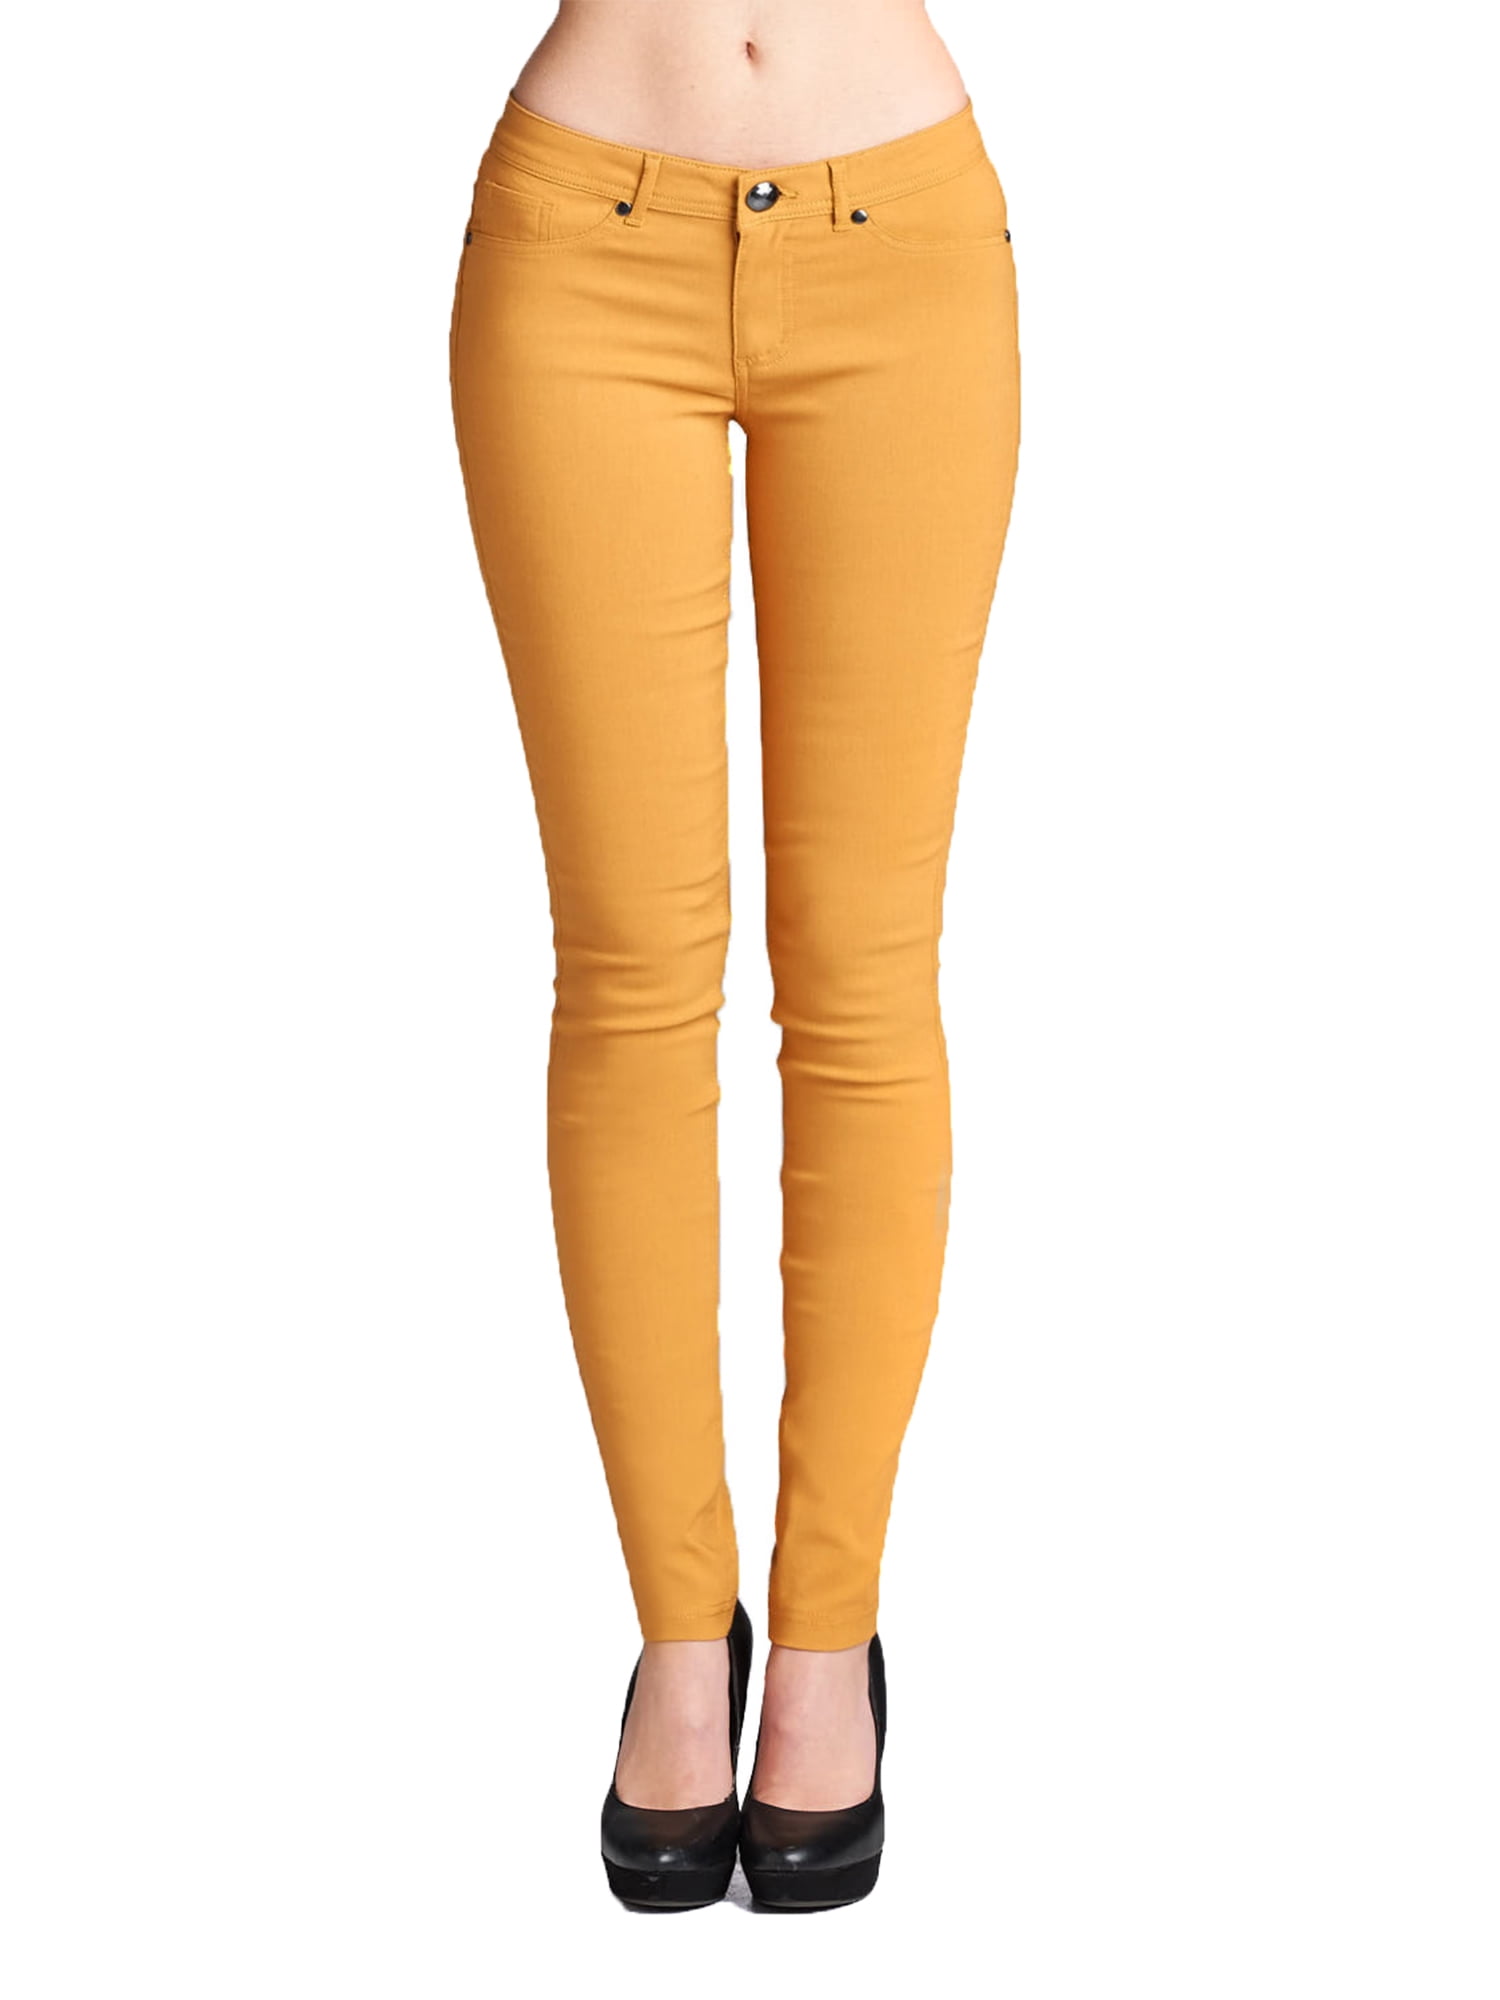 Buy TryME Women's Skinny Fit Satin Leggings (BE01_Multicolour_30) at